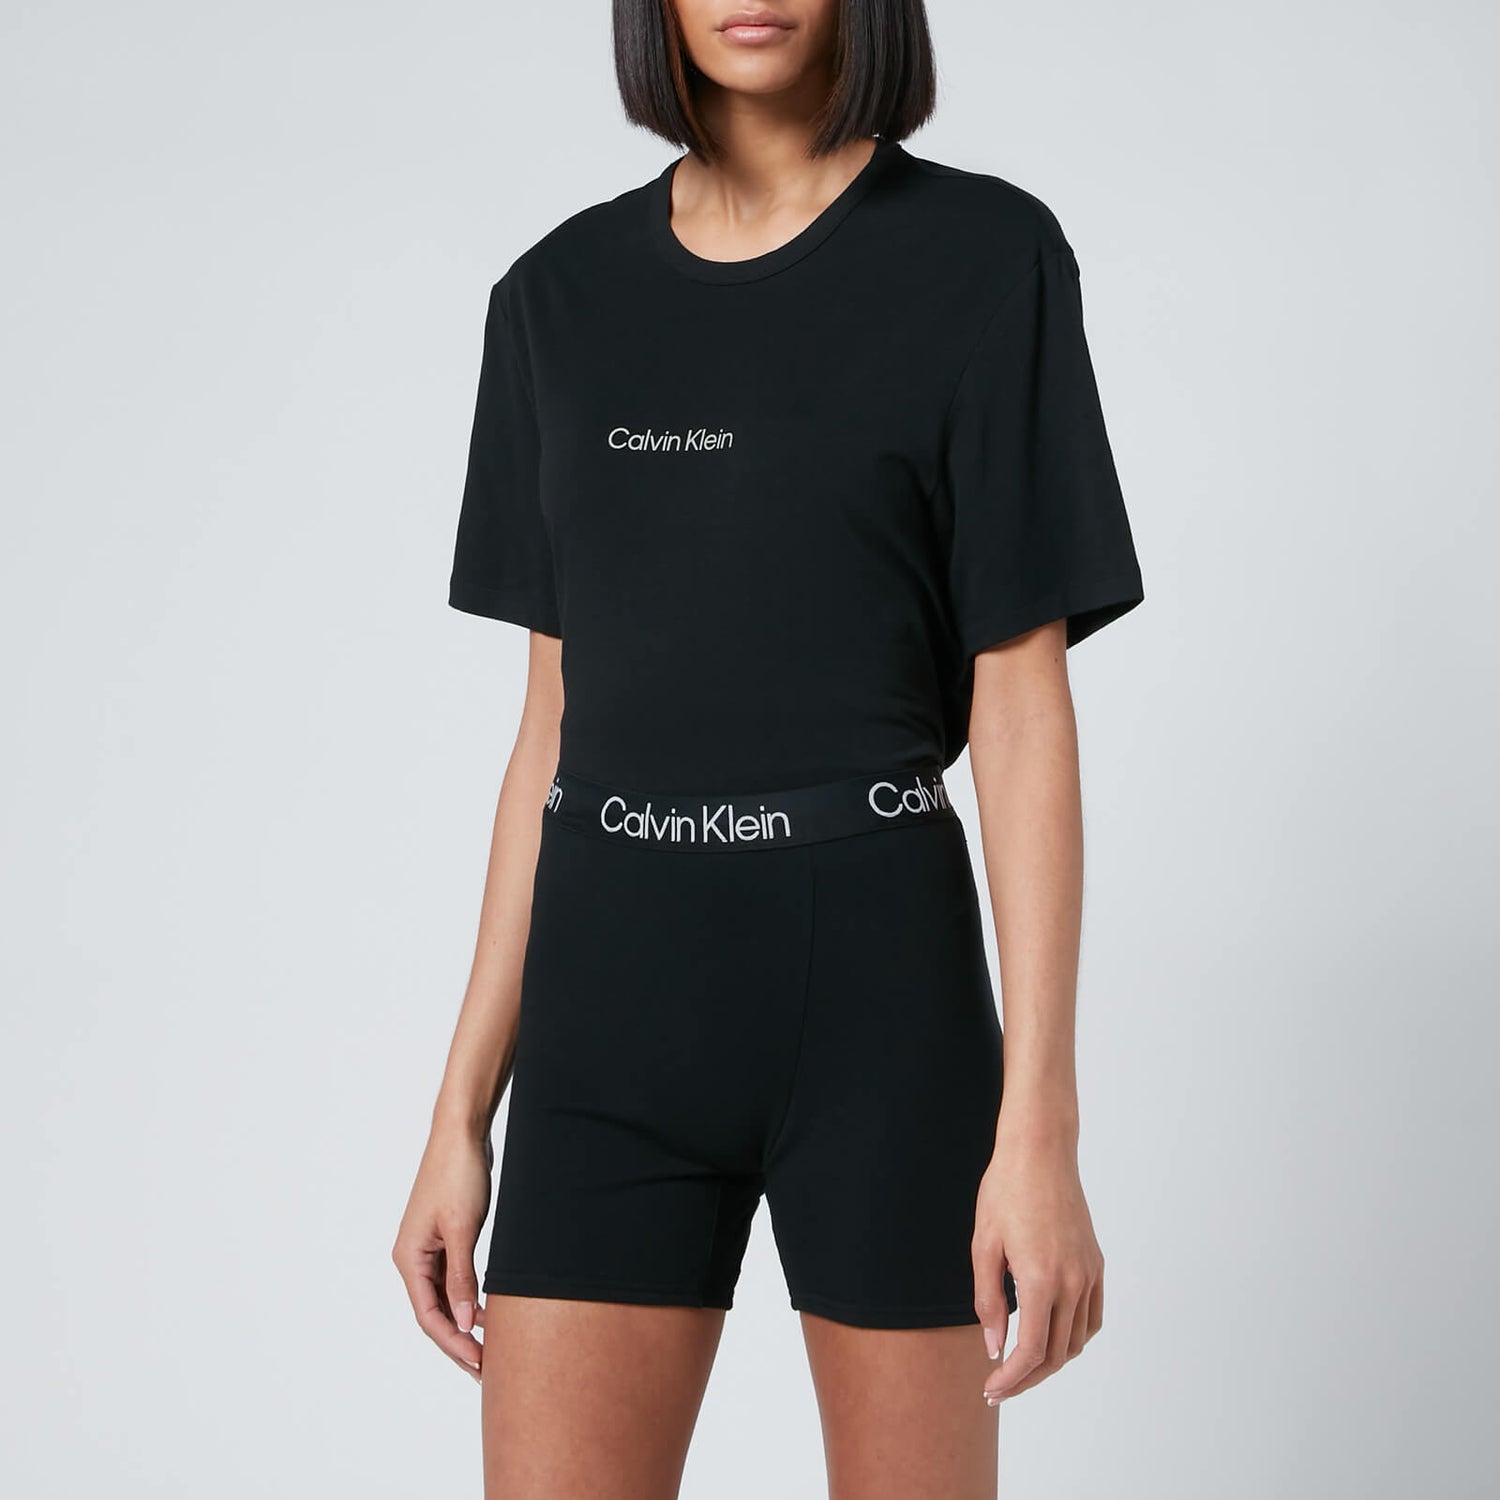 Calvin Klein Women's Short Sleeve T-Shirt And Shorts Set - Black - S